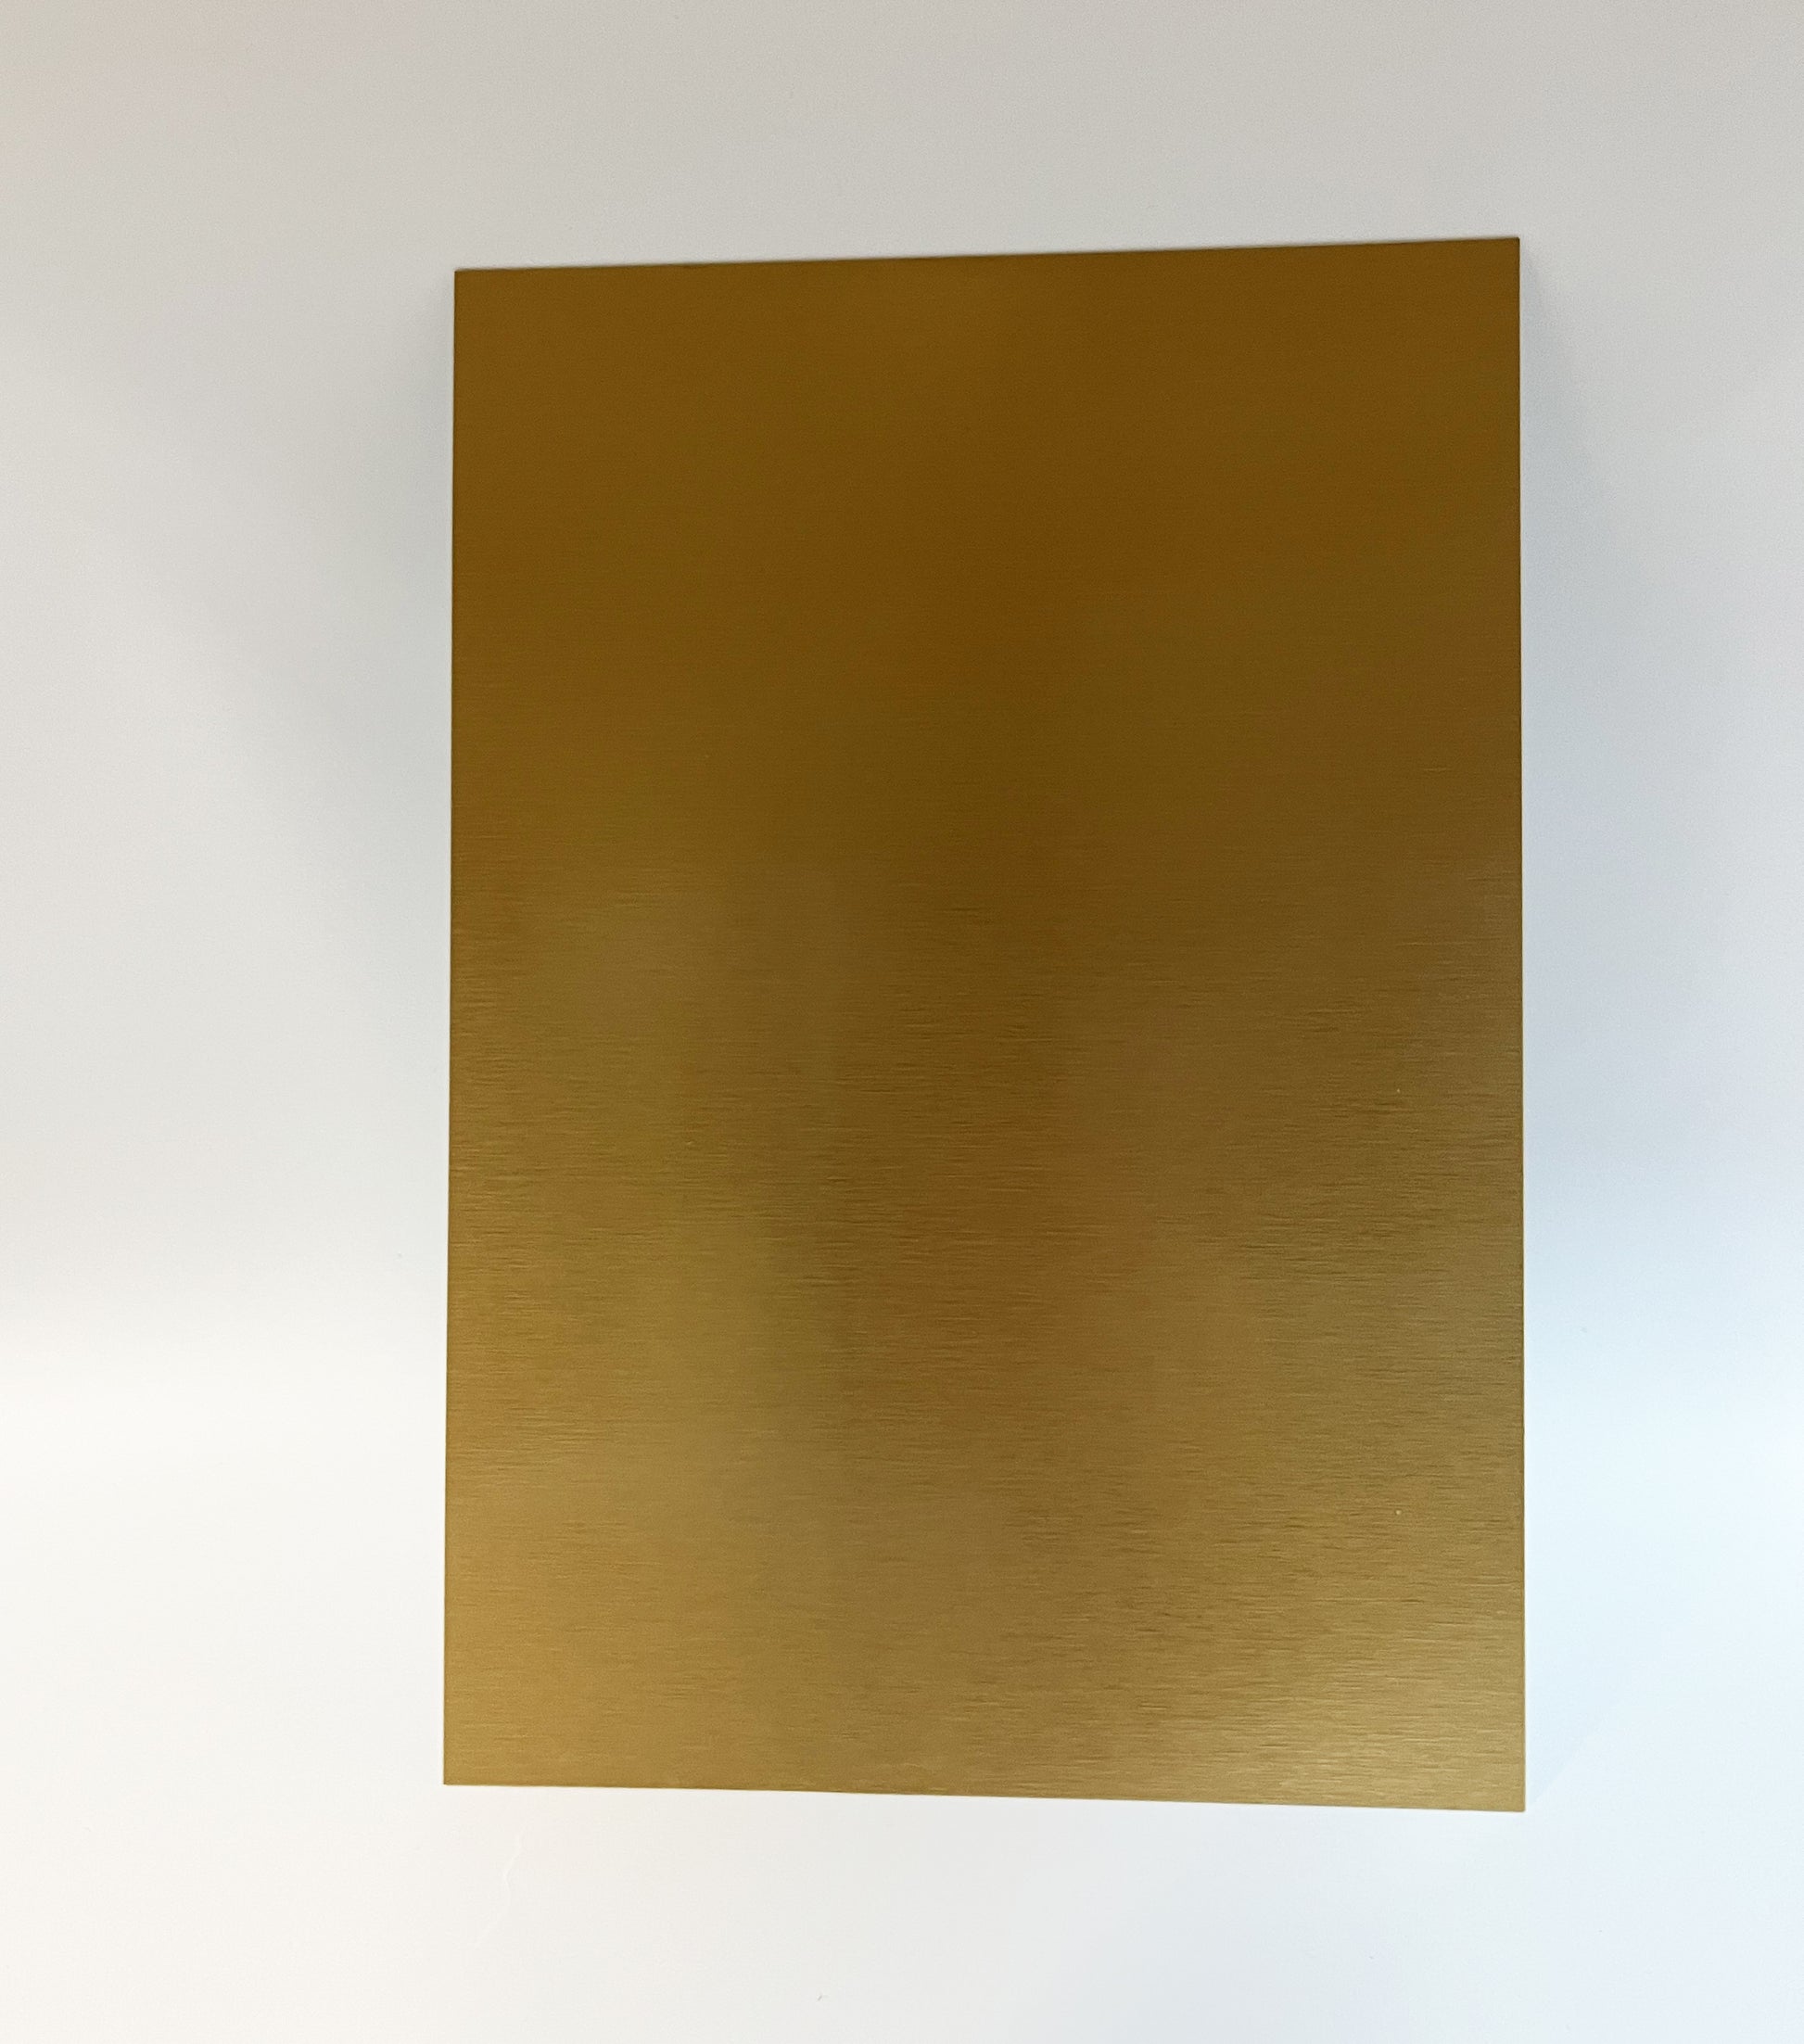 Aluminiumplatte 26 x 18 cm, Silber, Weiß, Gold - Sublishop.net GmbH